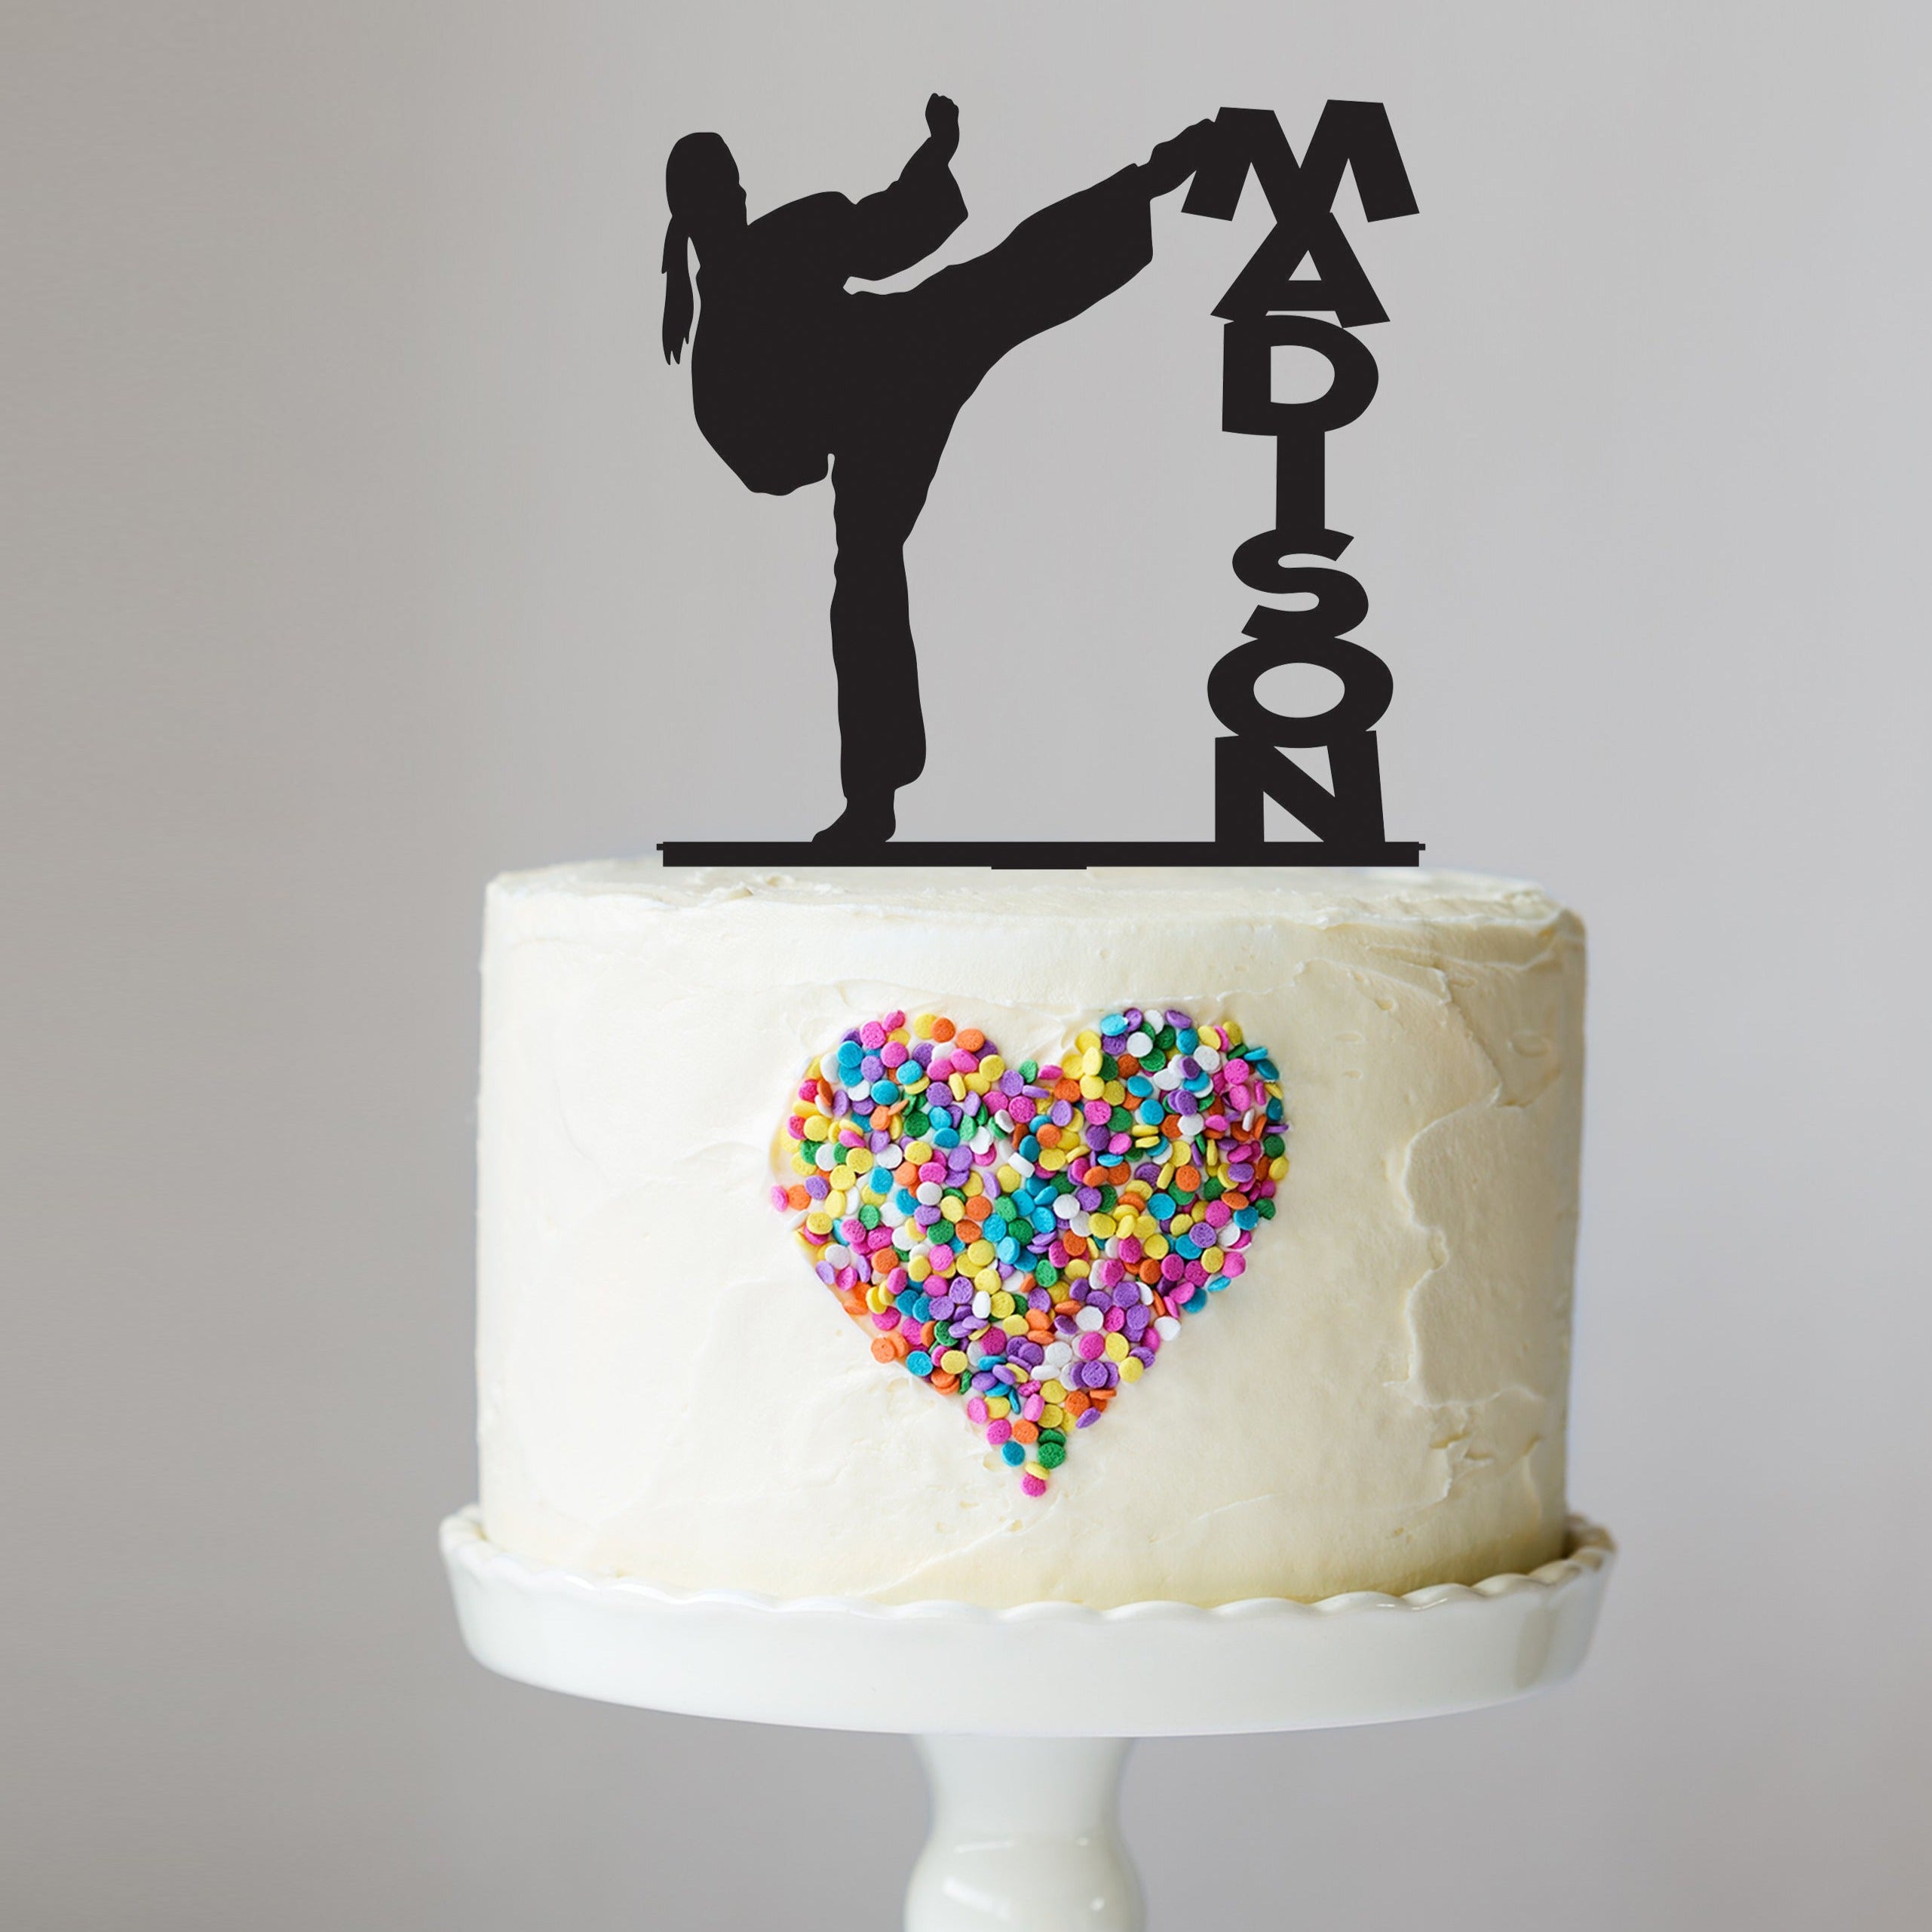 taekwondo cake | Cake, Creative birthday cakes, Party cakes